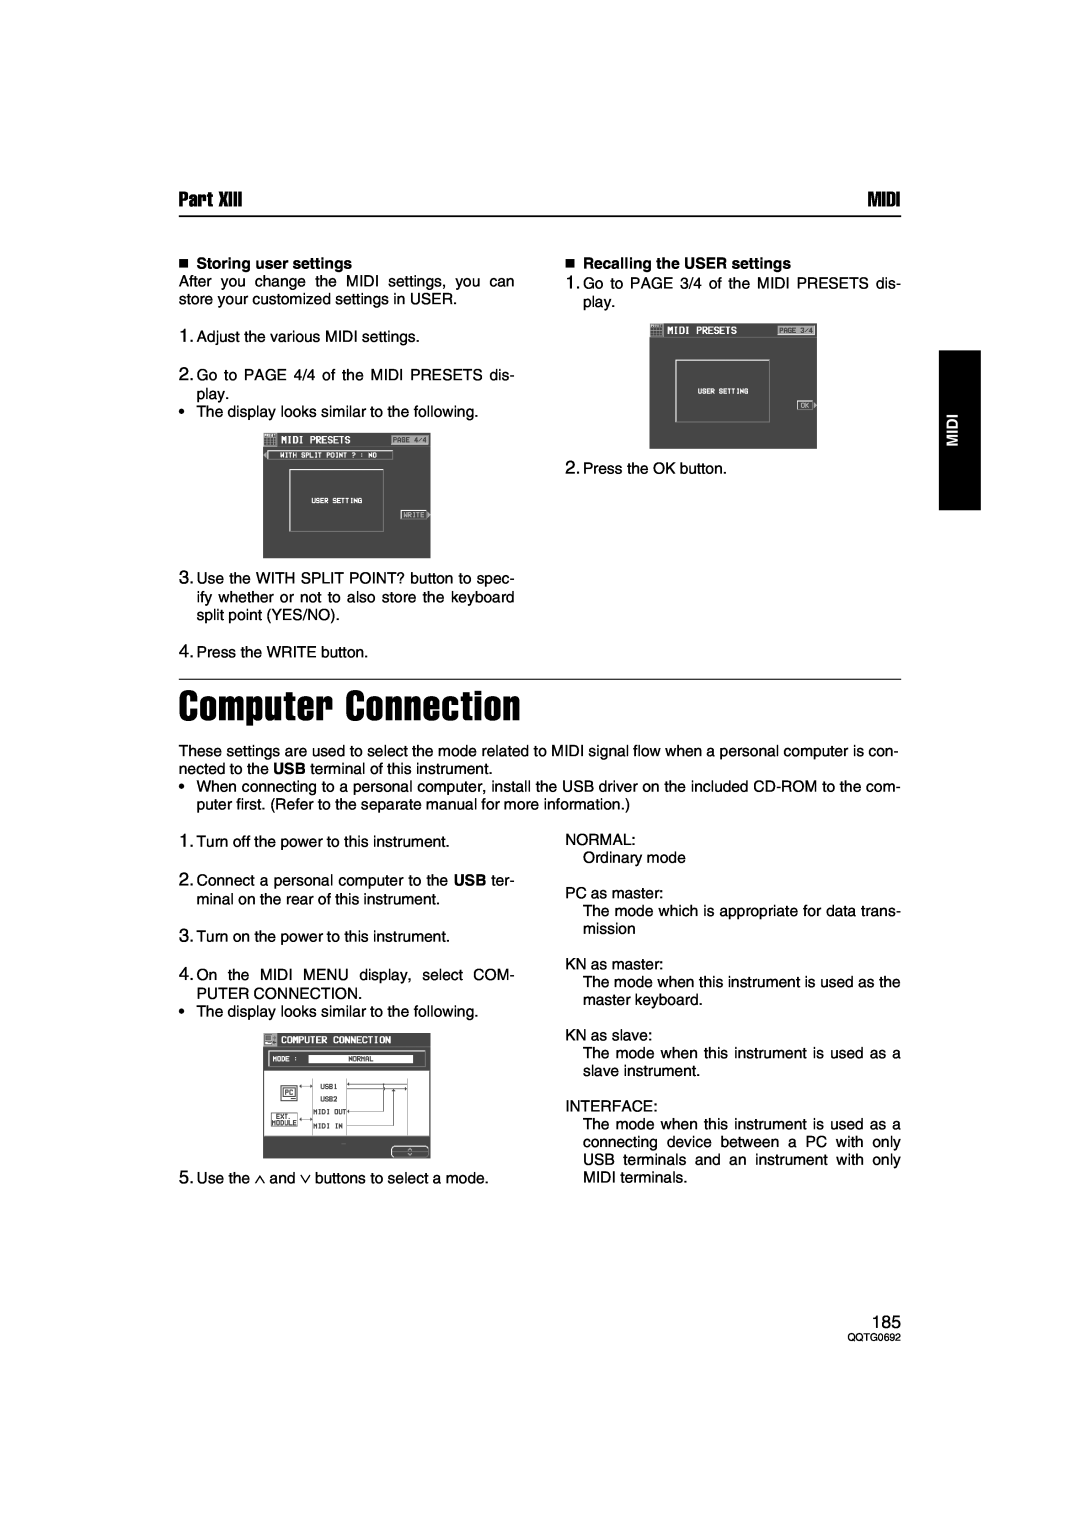 Panasonic SX-KN2400, SX-KN2600 manual Computer Connection, Storing user settings, Recalling the USER settings, Part, Midi 